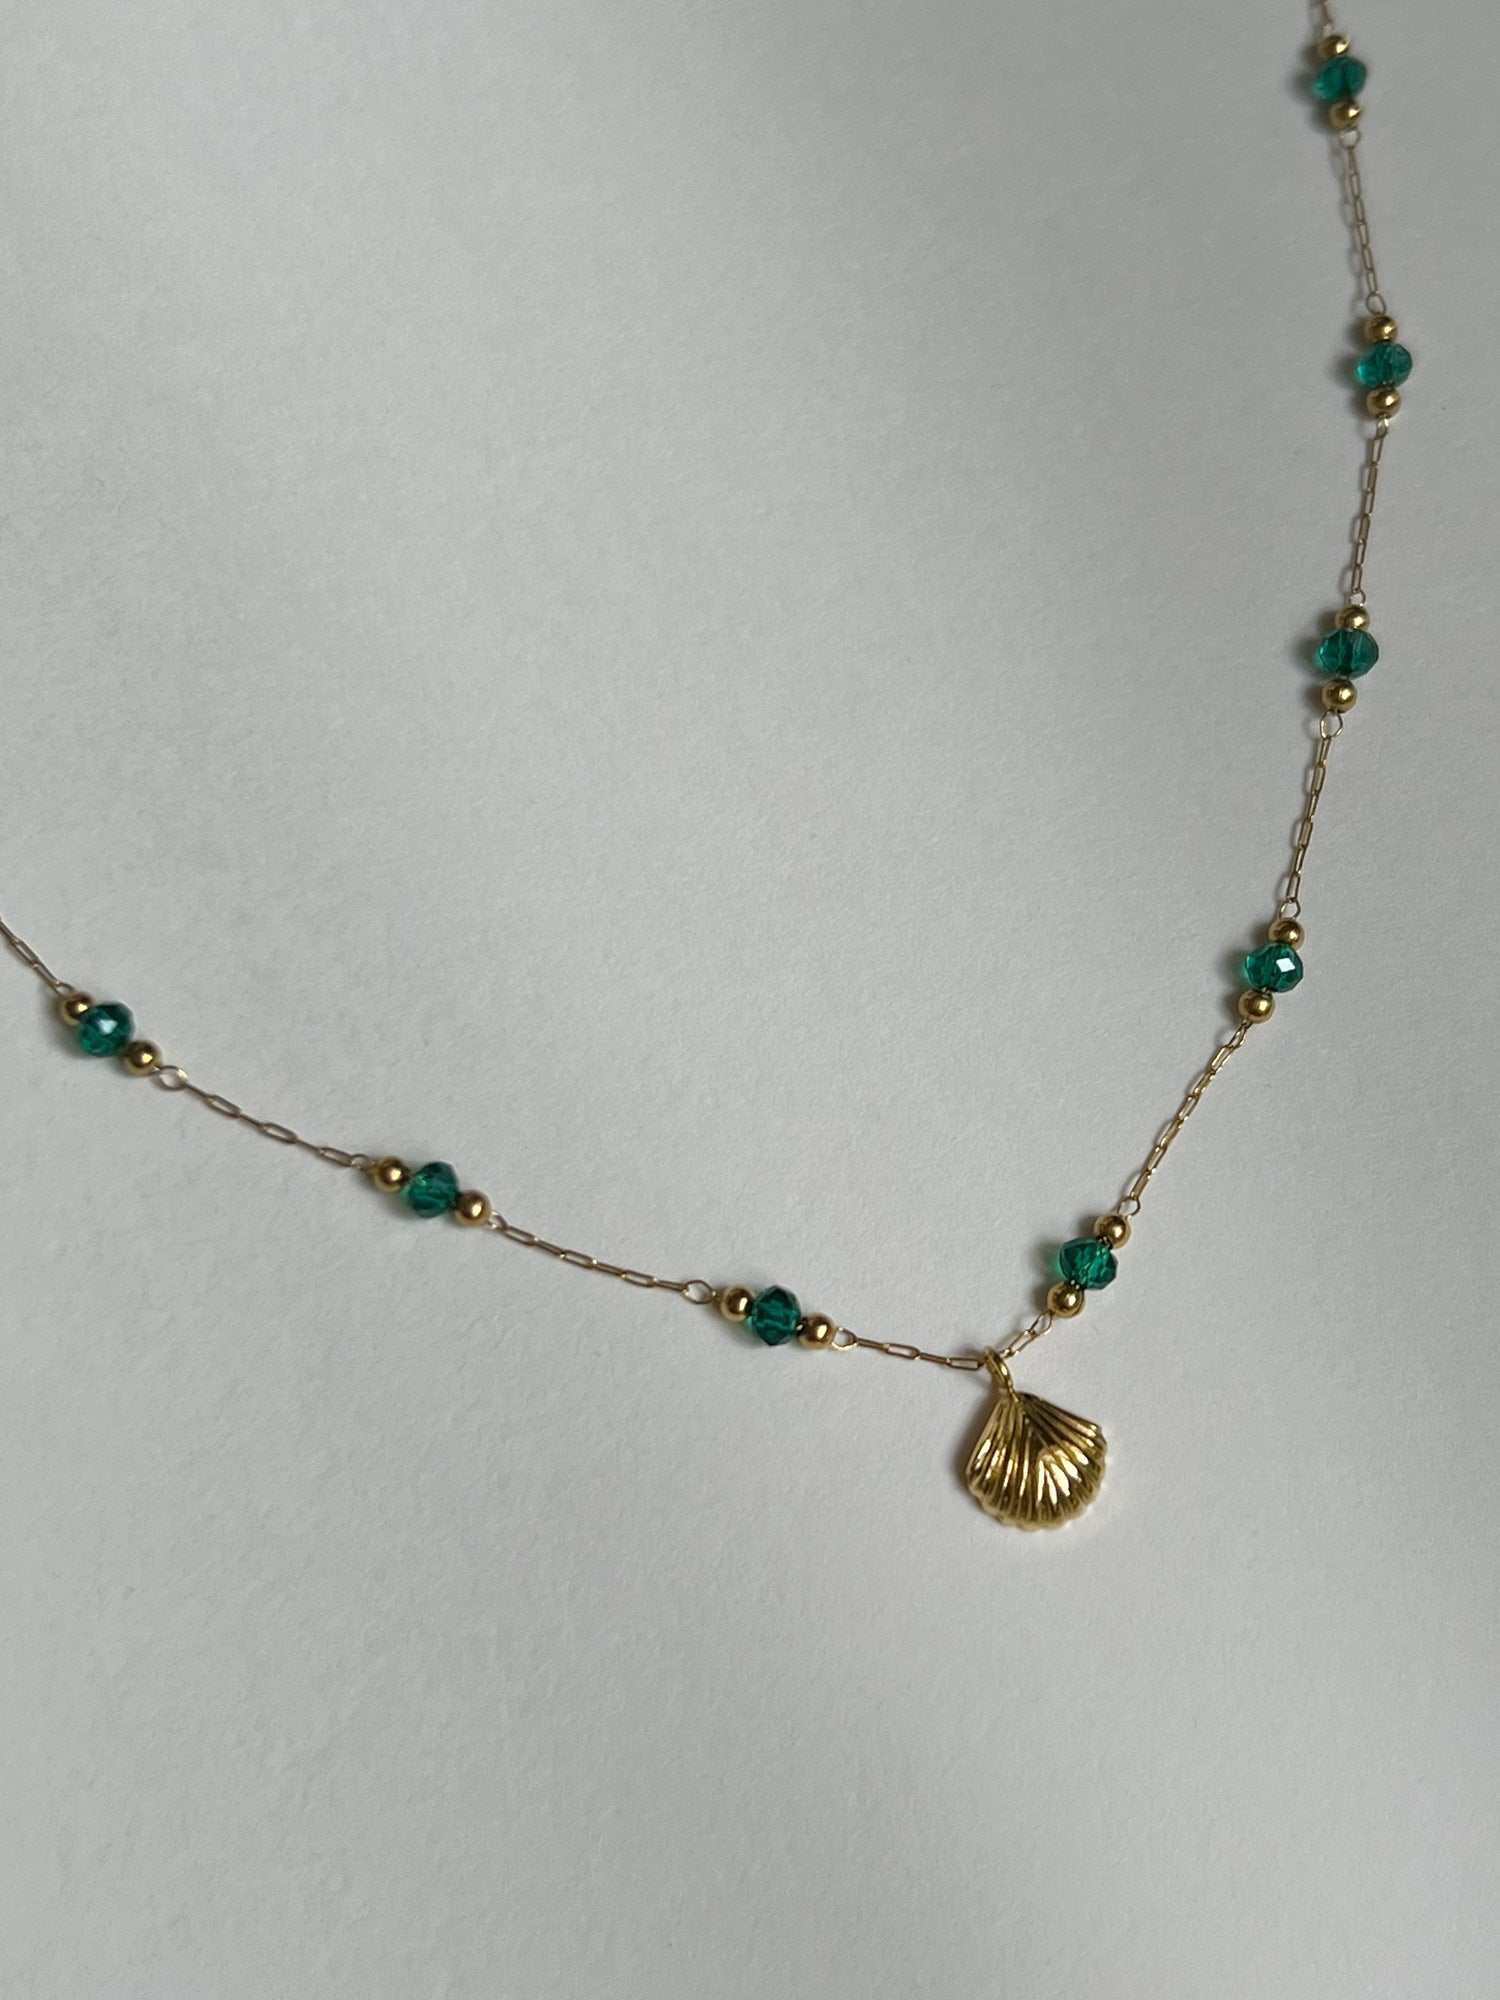 Collier sirène perlé vert vintage avec pendentif coquillage